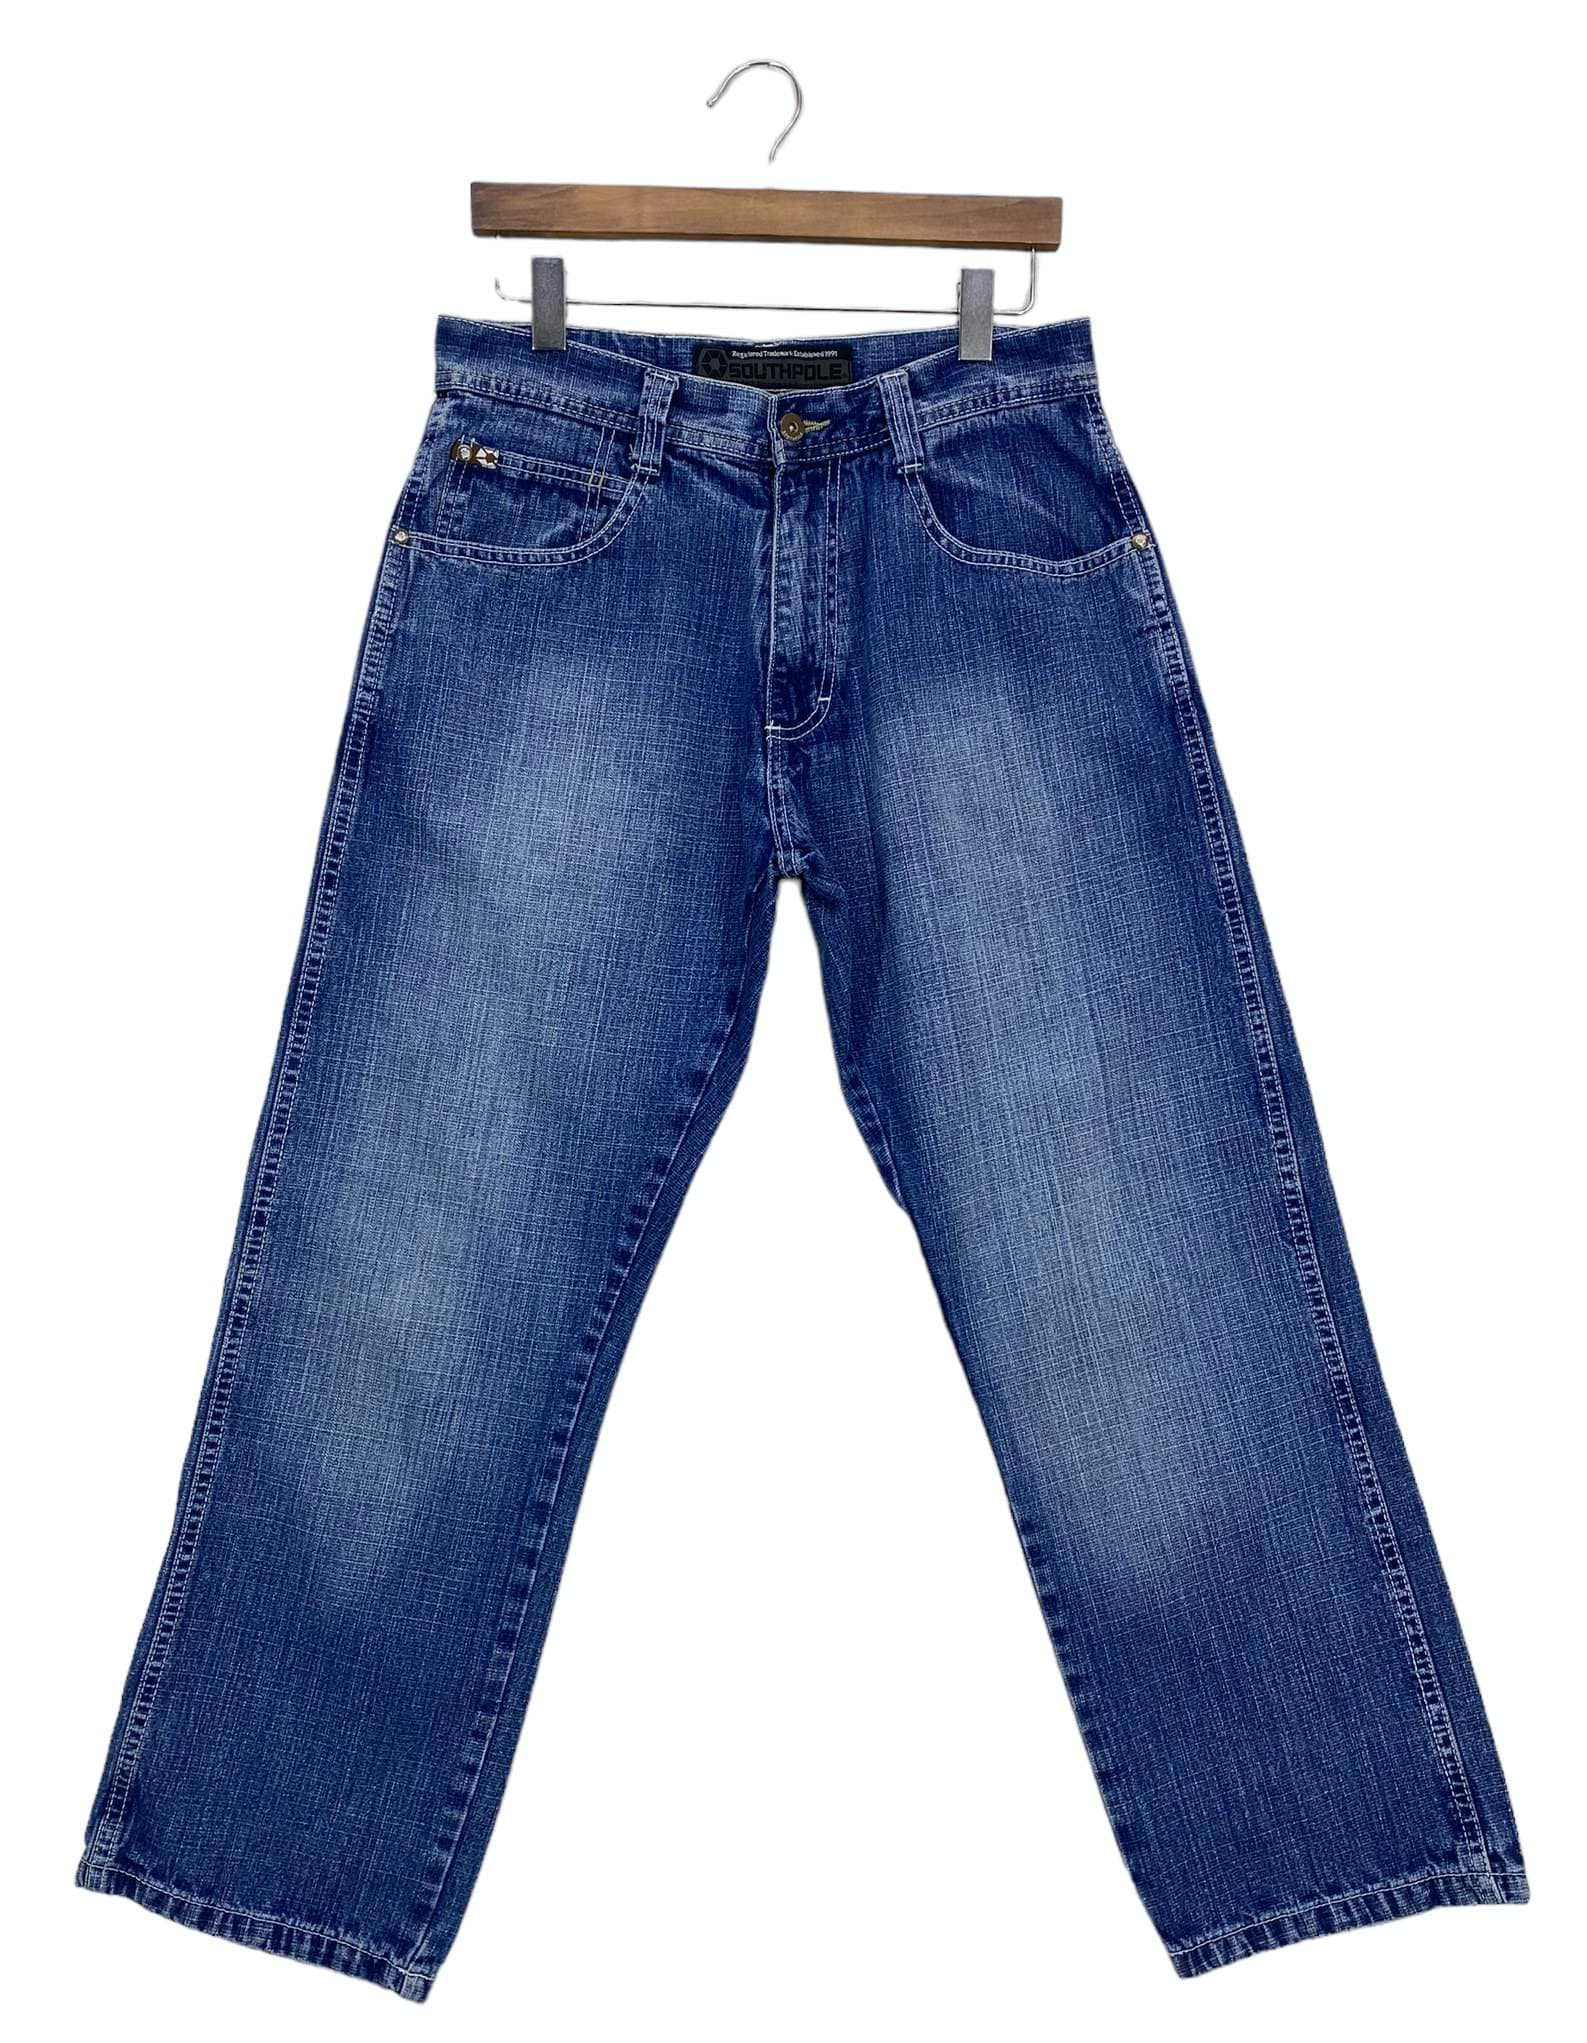 Southpole Jeans Size W32xl28.5 Vintage Southpole Baggy Denim 